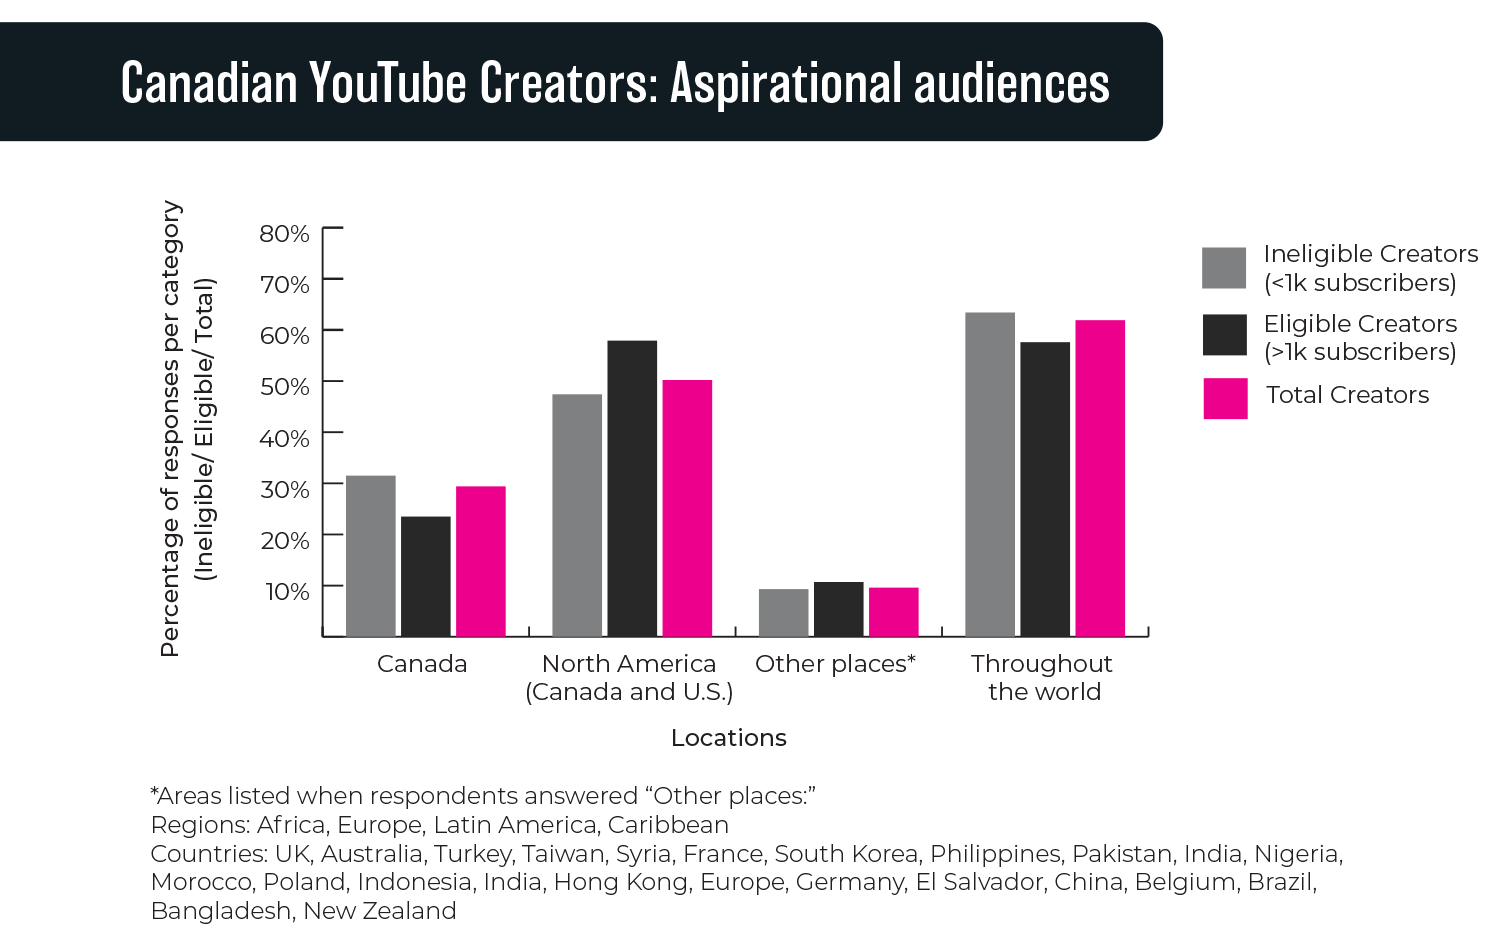 Figure 3.7: Canadian YouTube Creators: Aspirational audiences